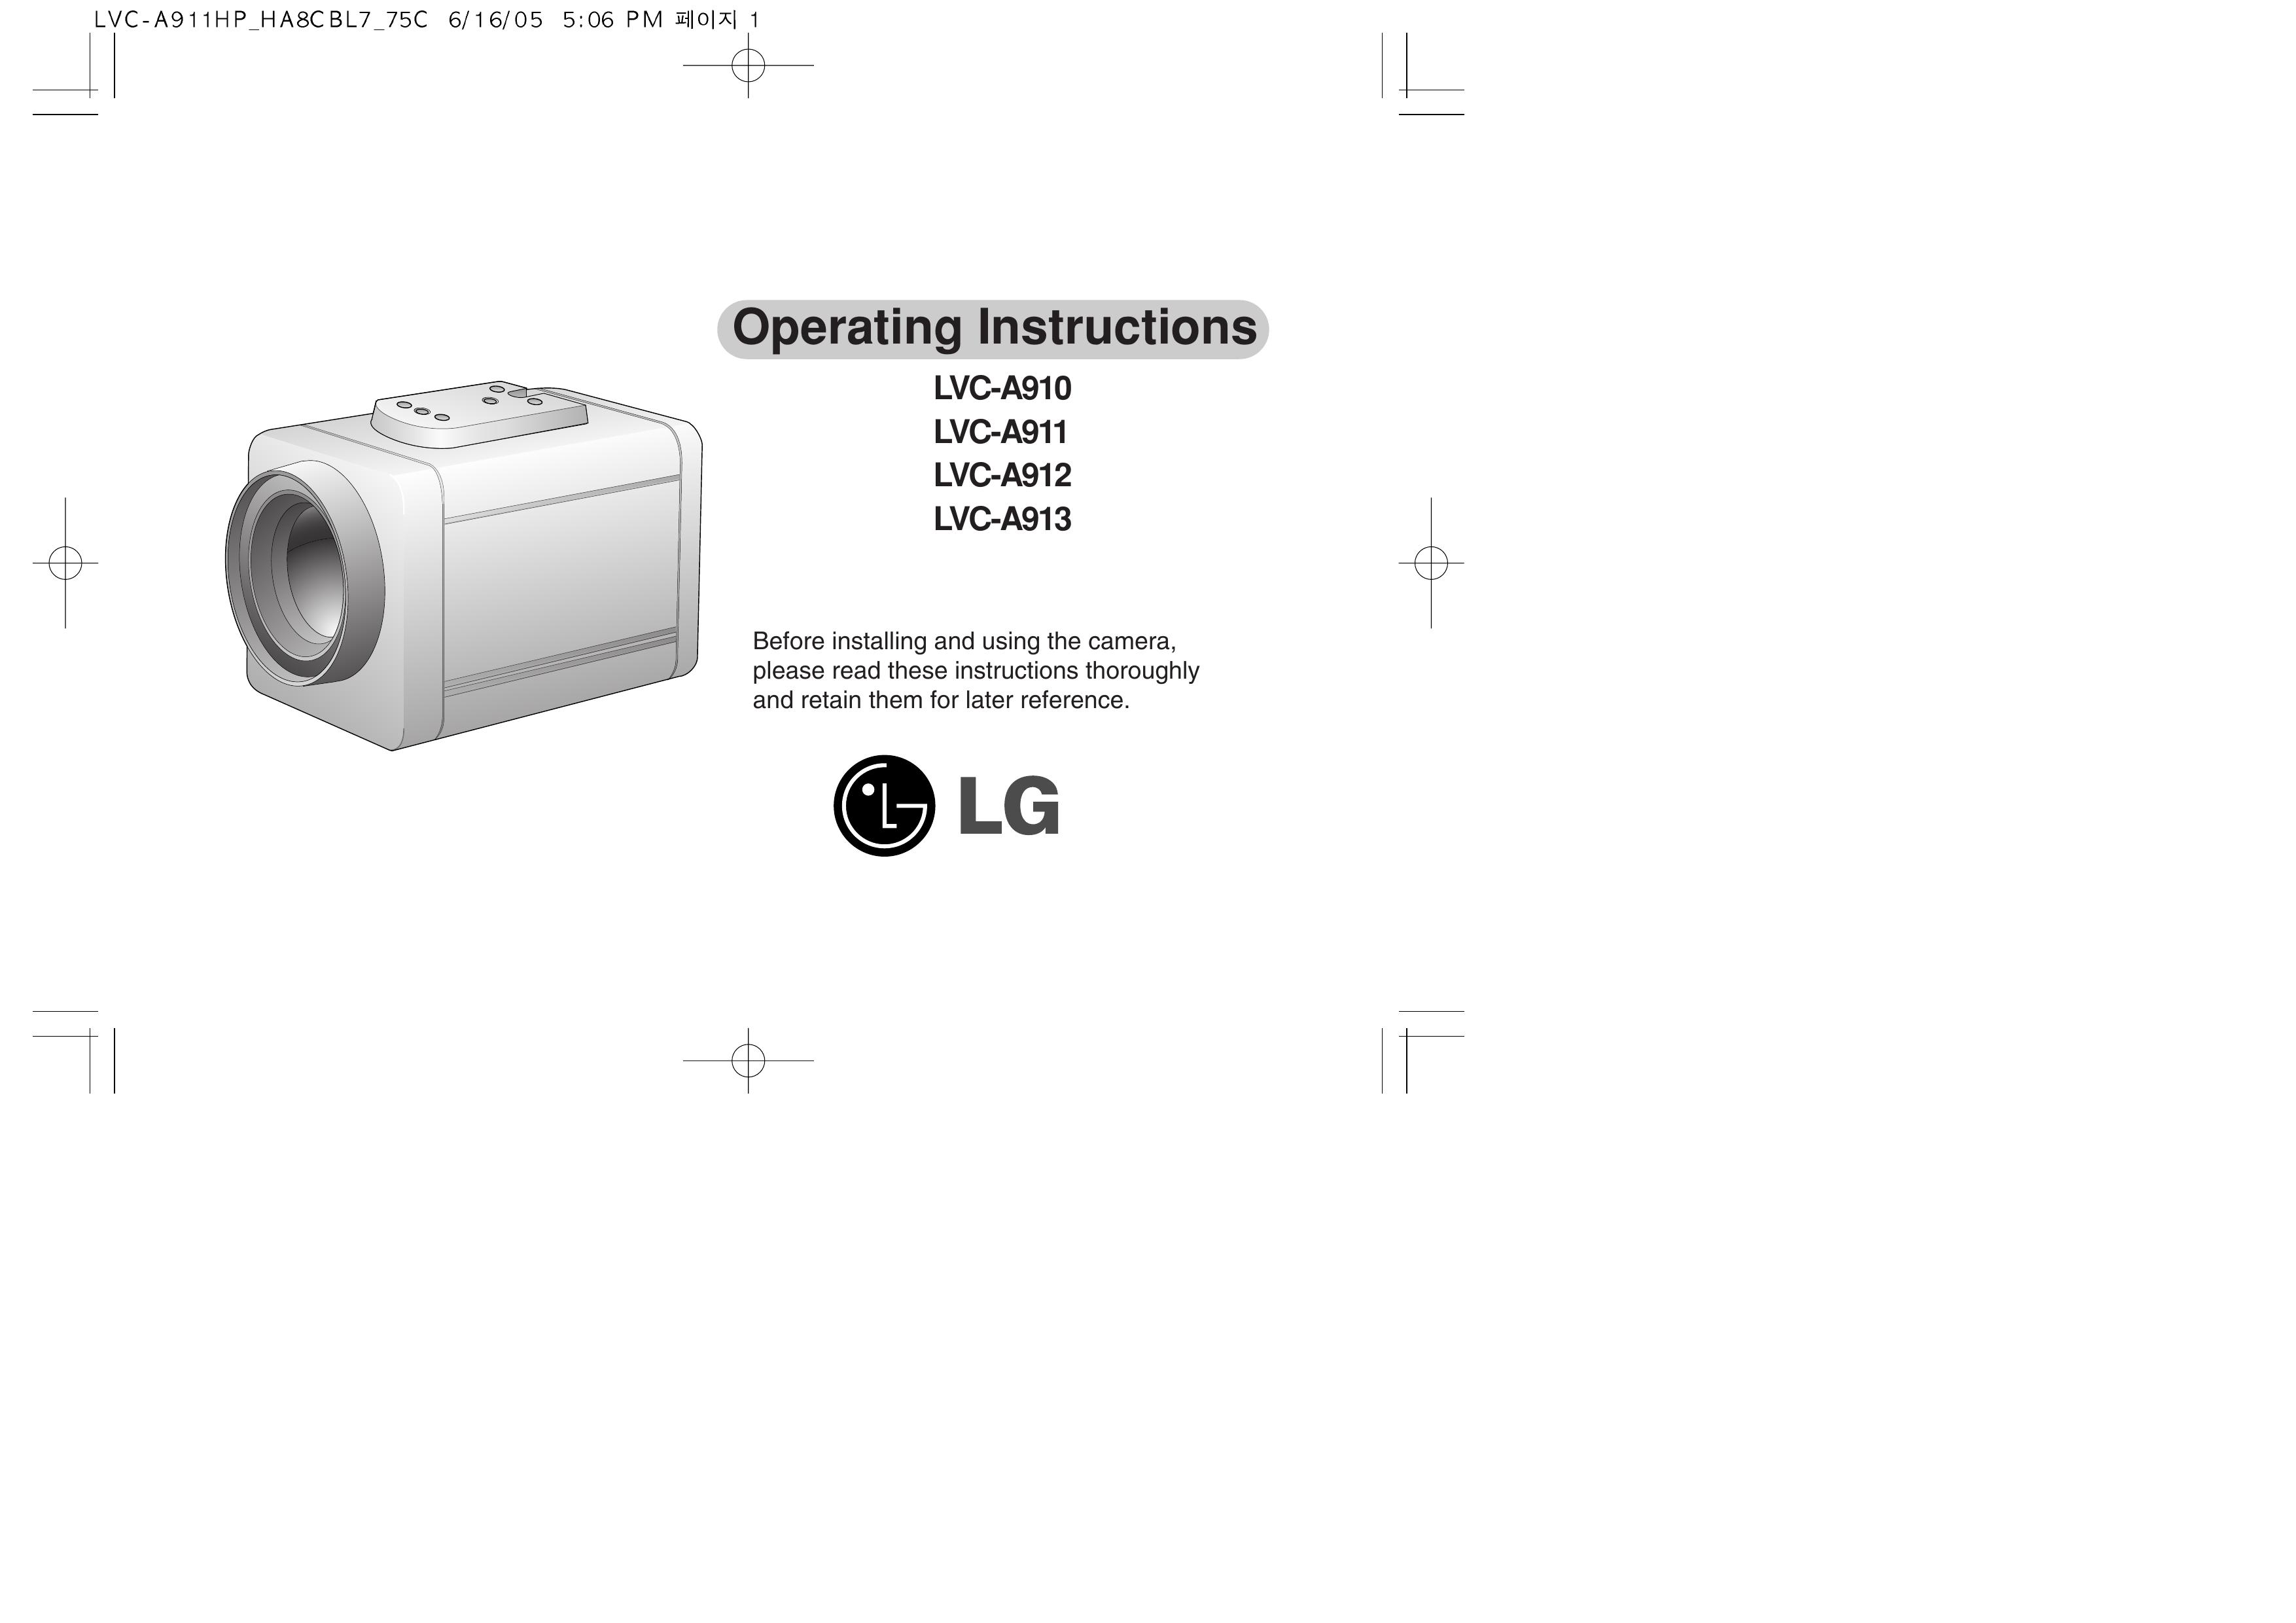 LG Electronics LVC-A911 Digital Camera User Manual